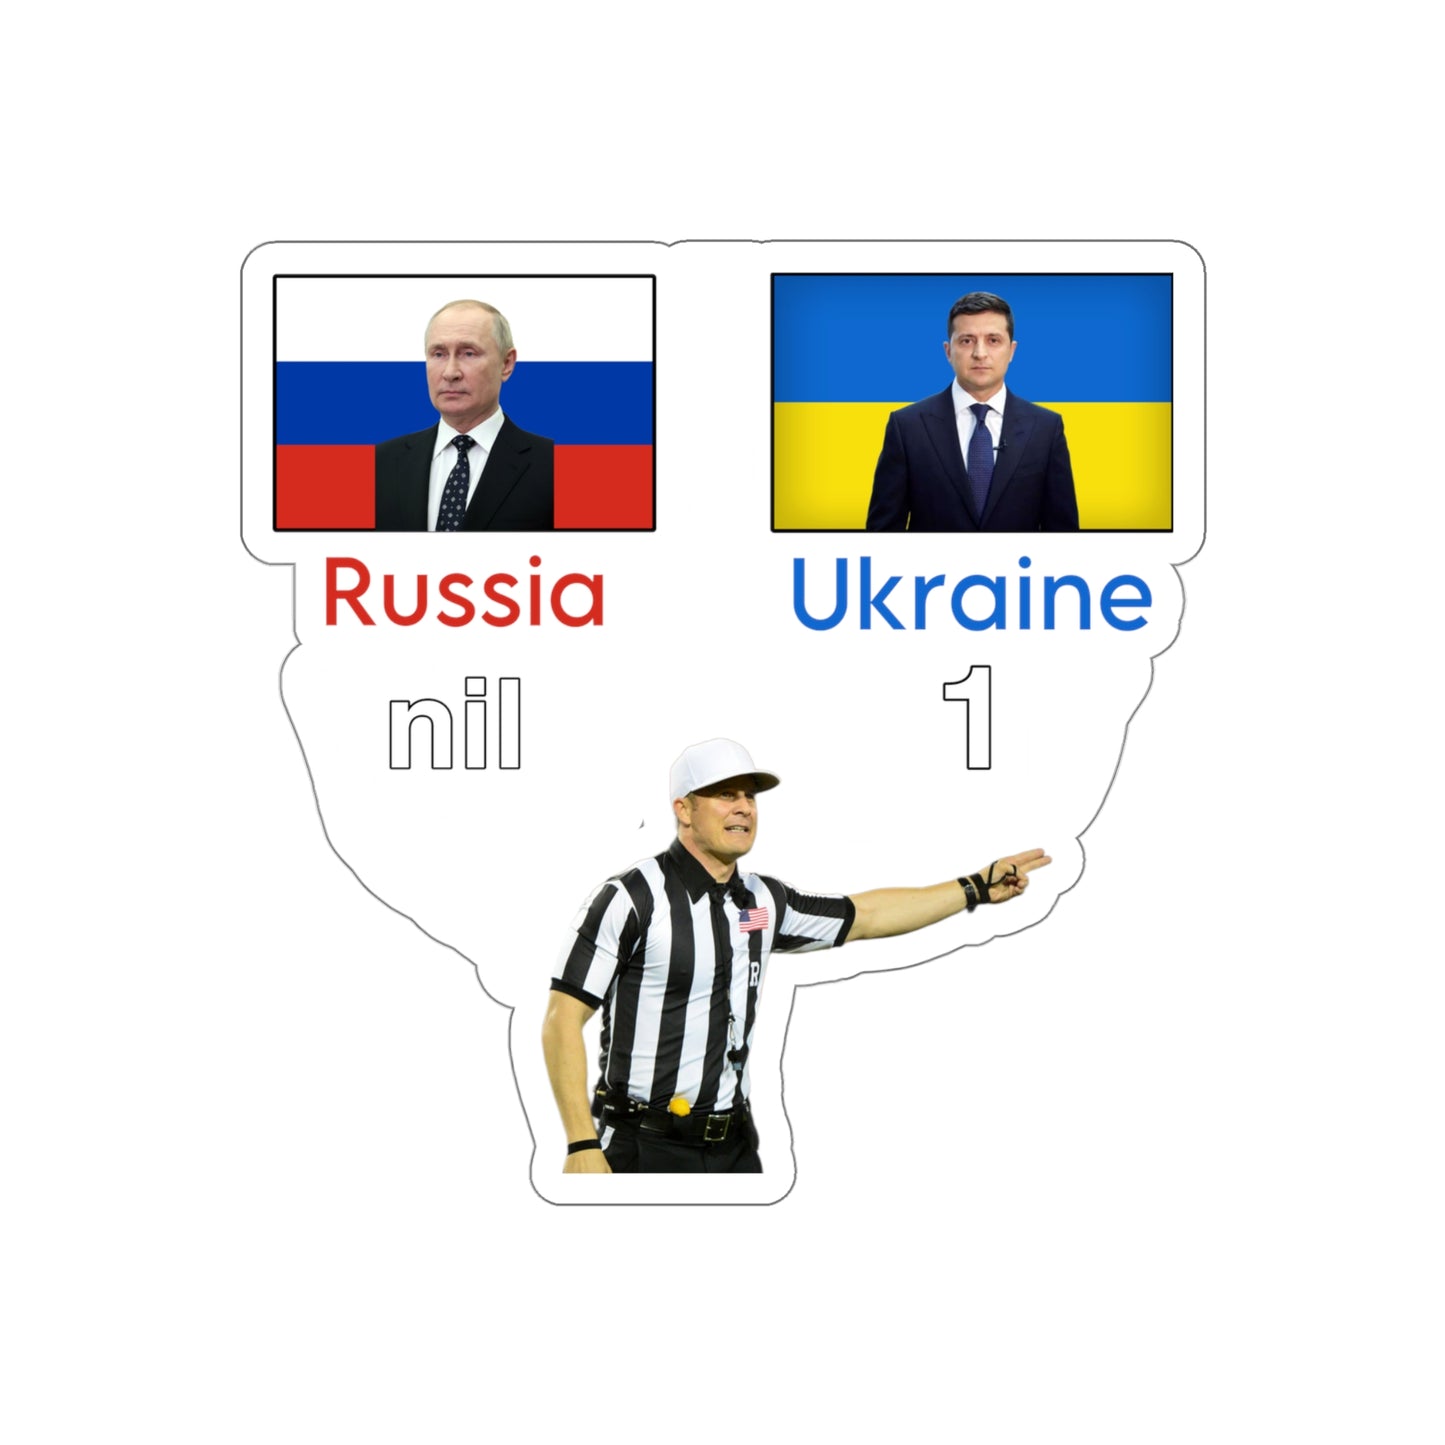 Russia nil, Ukraine 1